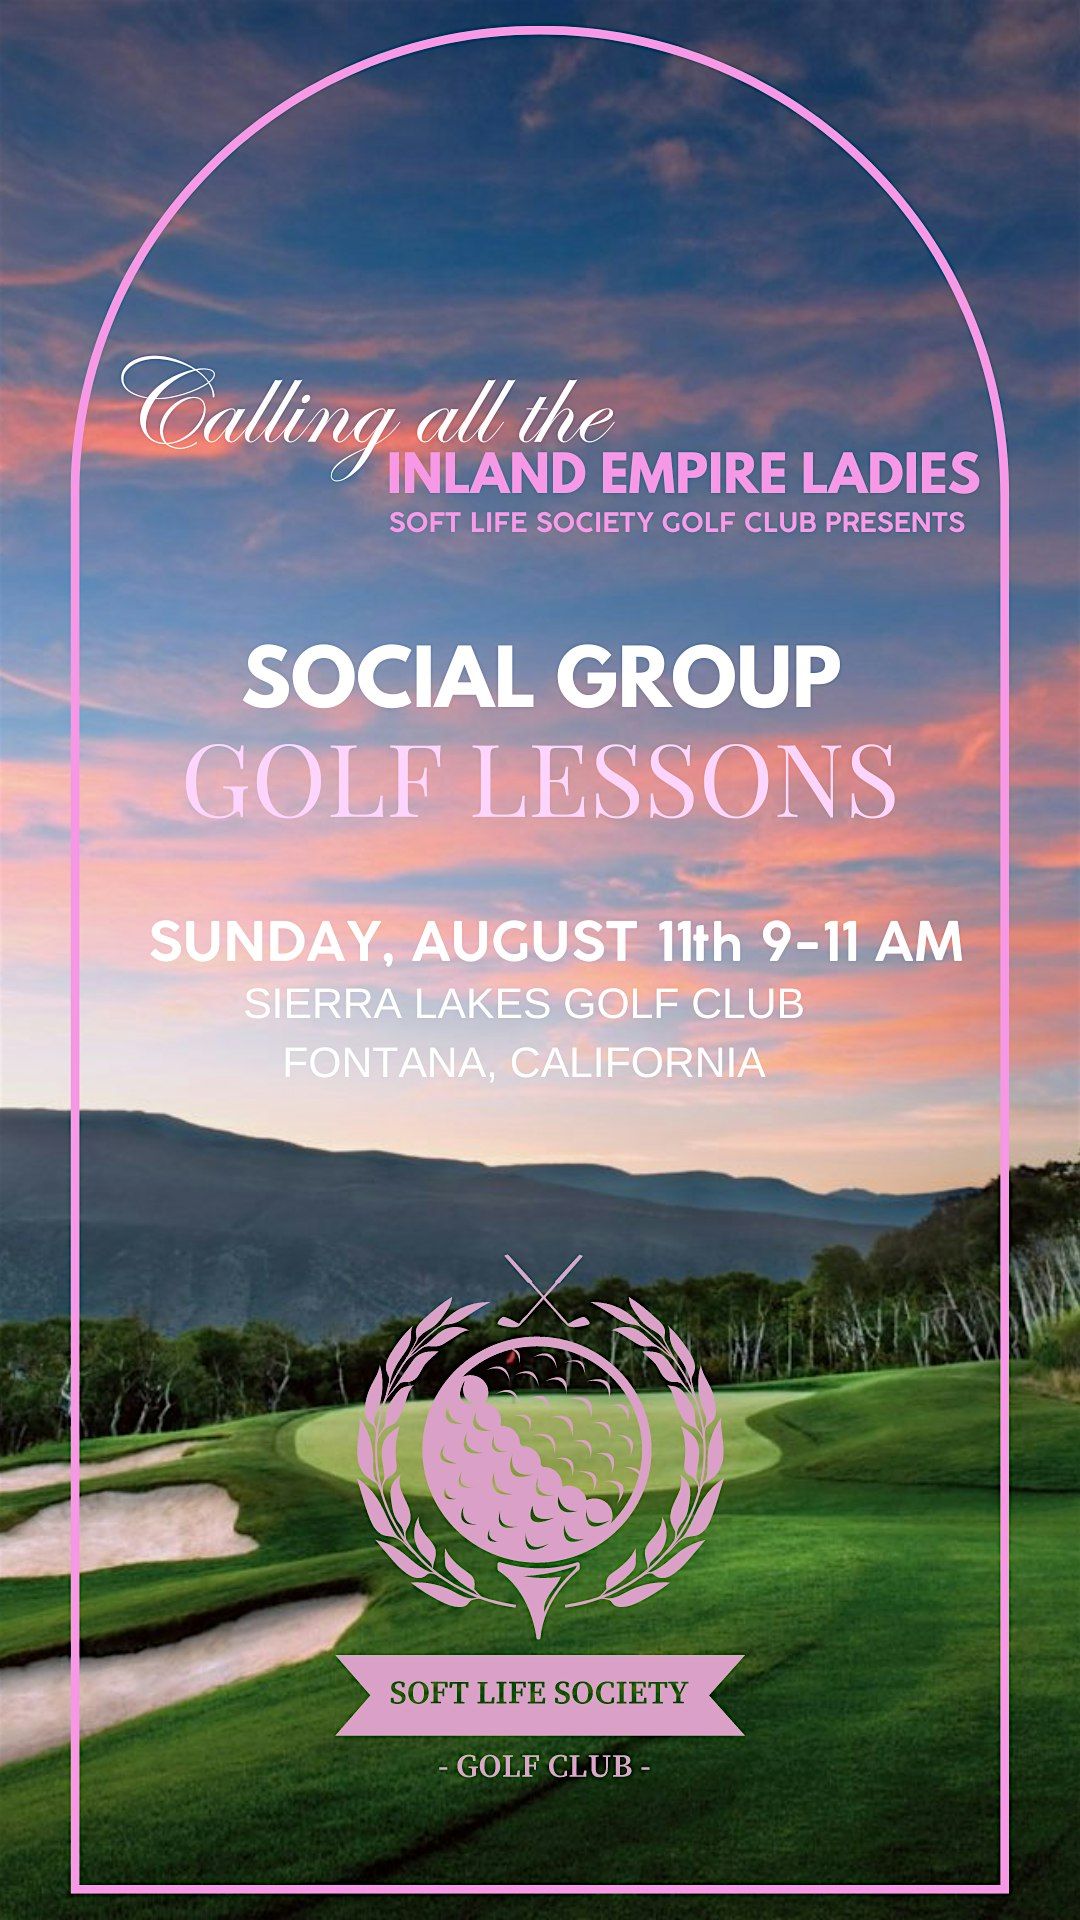 Soft Life Society Golf Club presents Social Group Golf Lessons